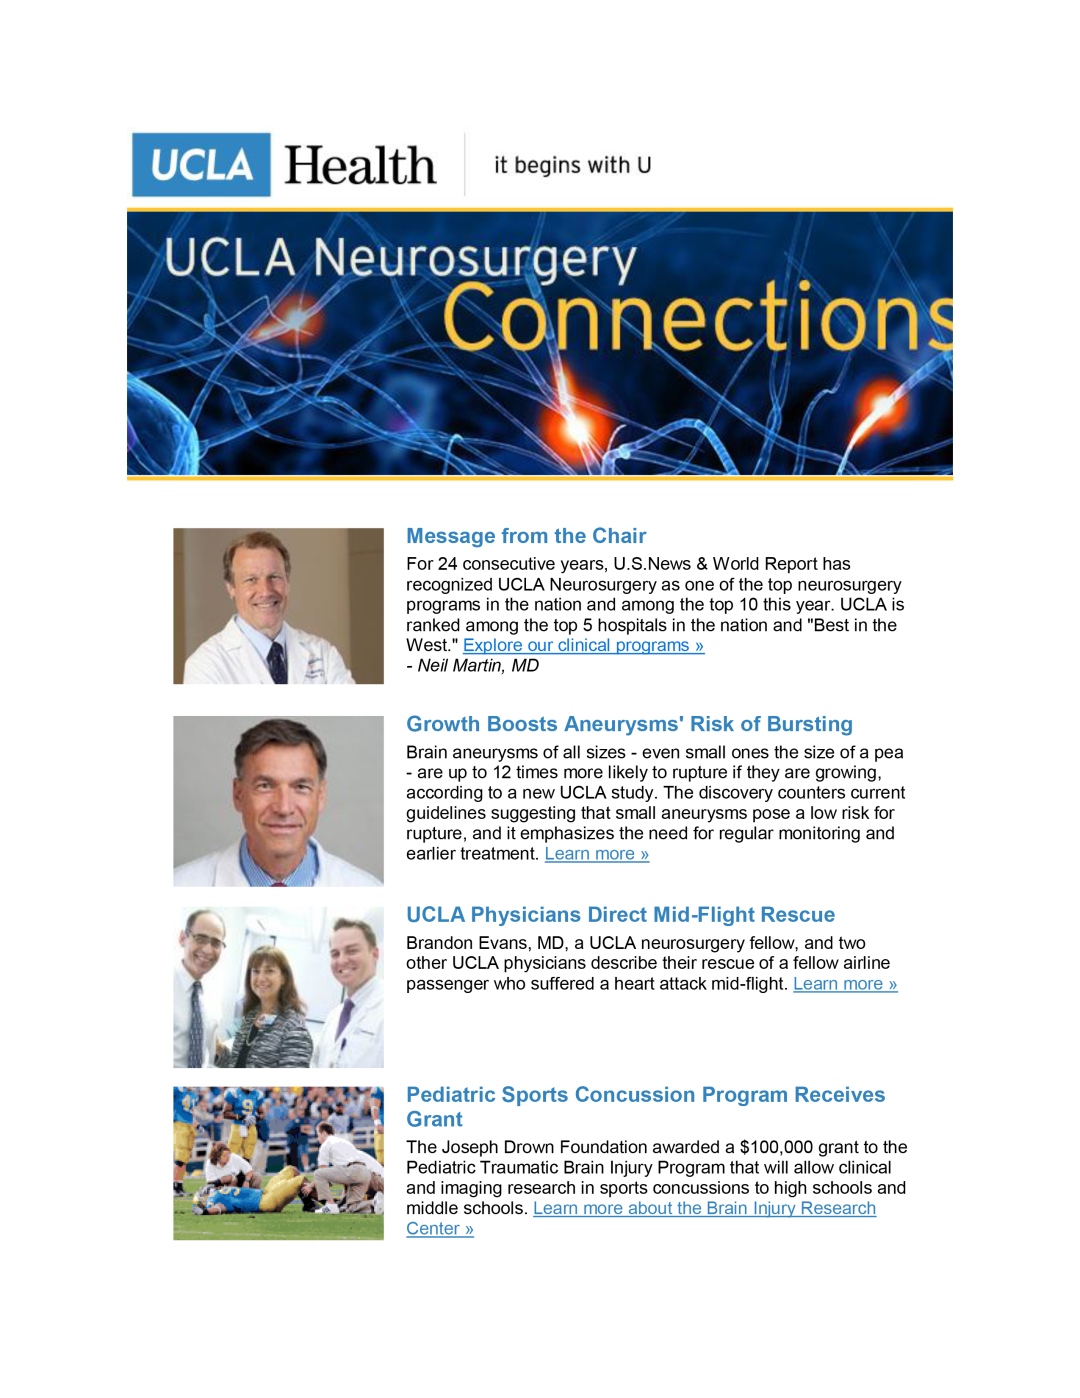 eNewsletters Neurosurgery UCLA Health